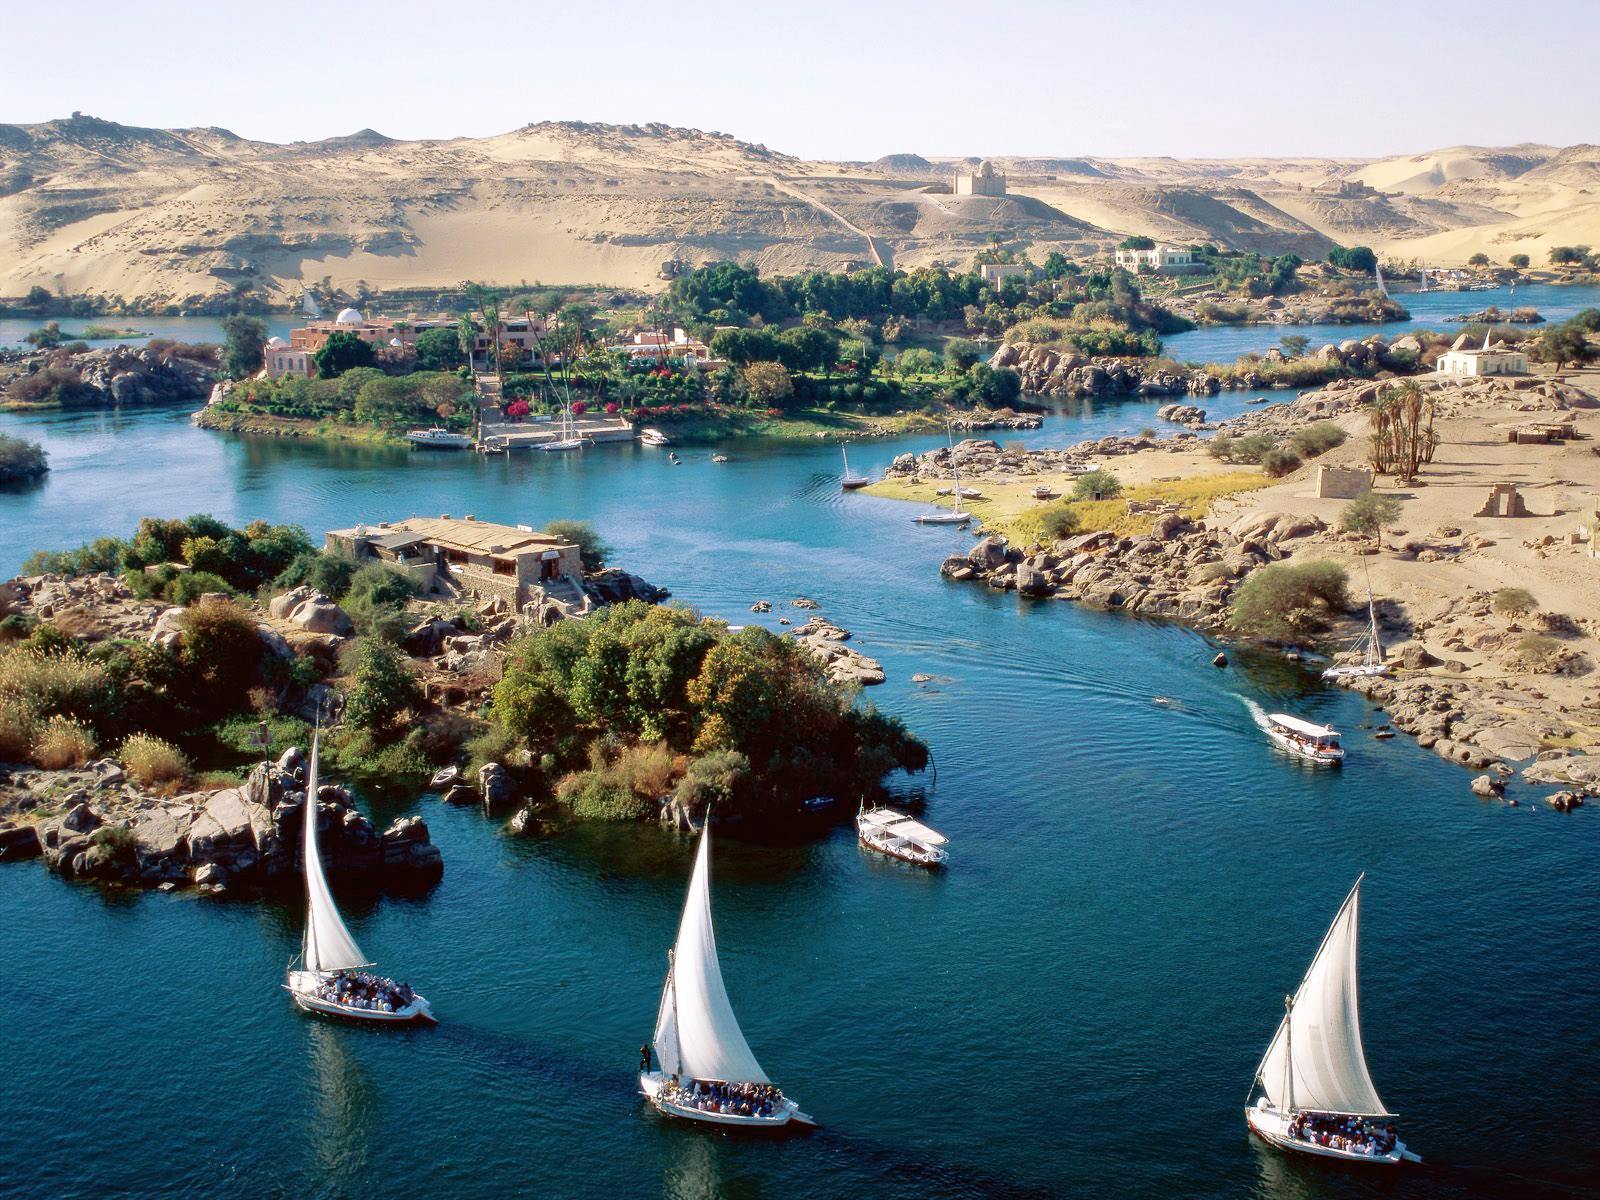 Tour of Aswan hilights including a felucca expirience Musement